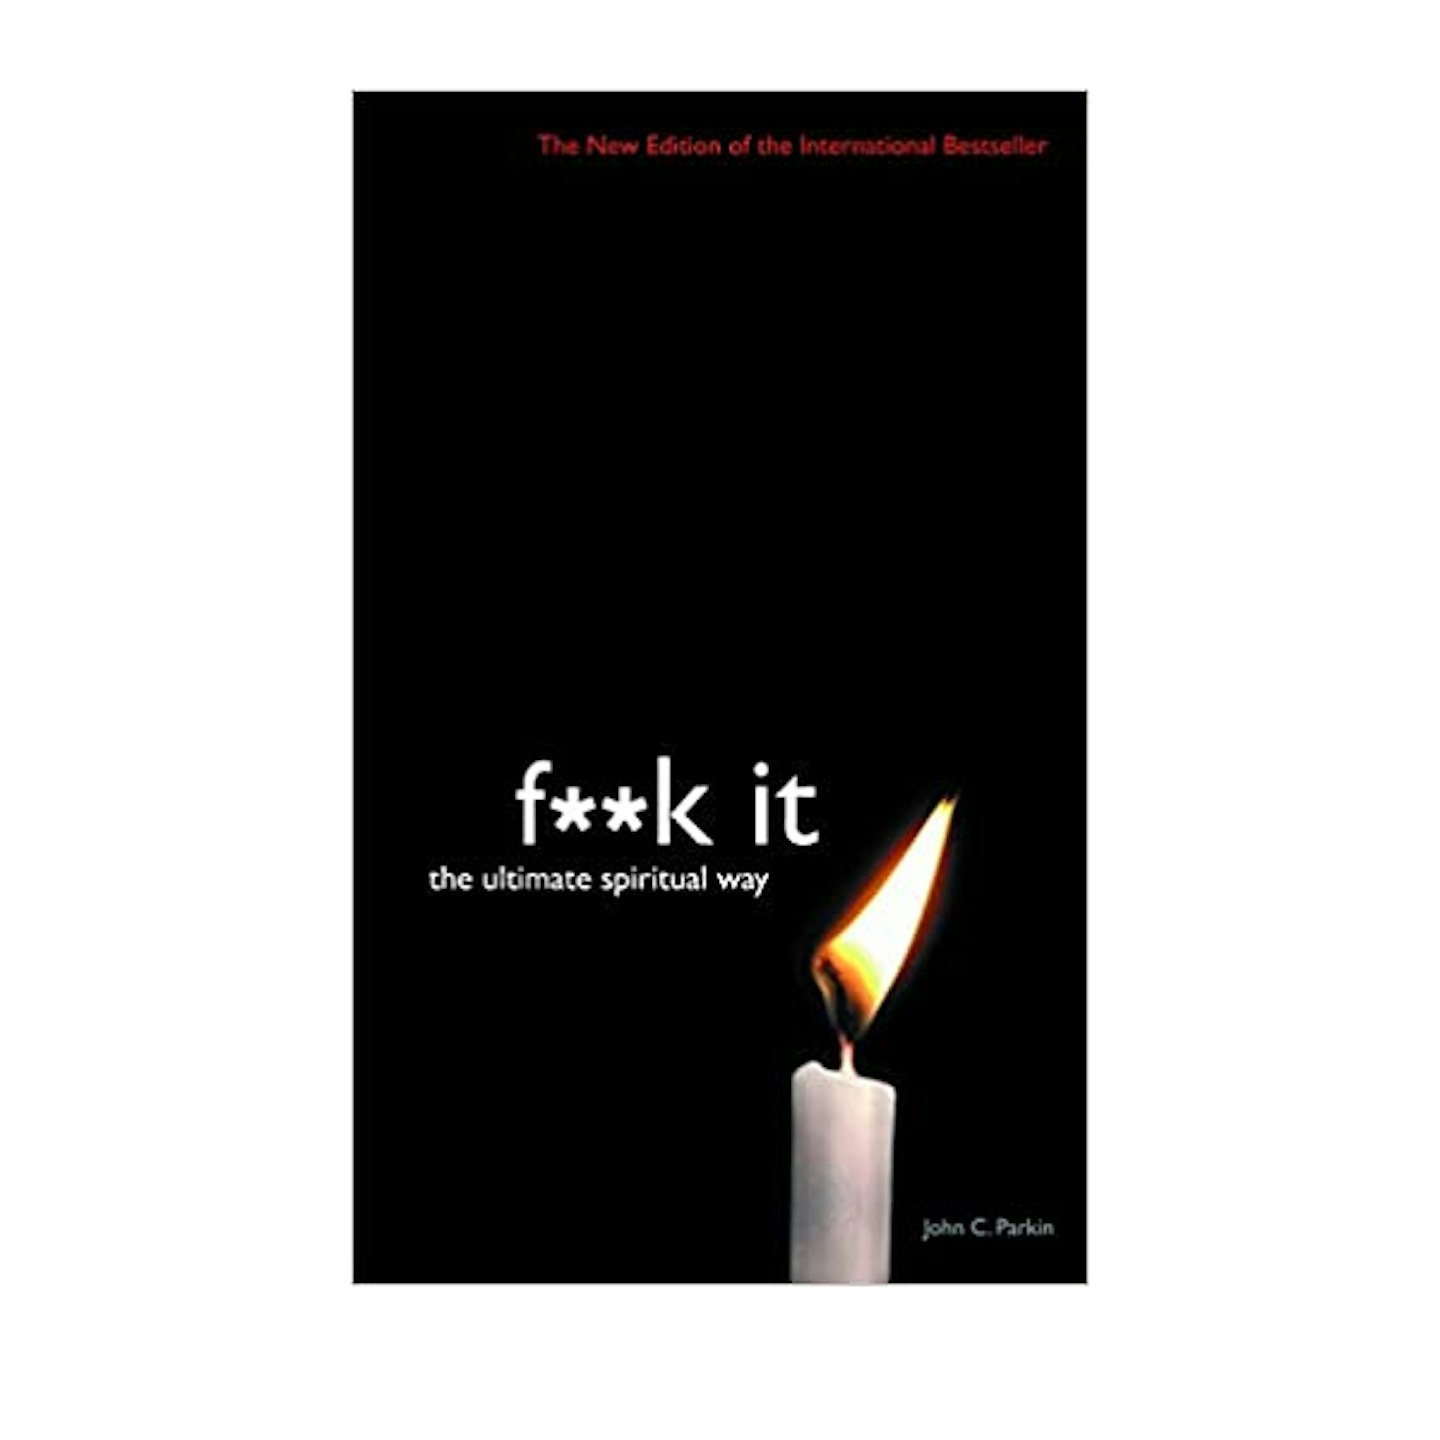 F**k it book cover